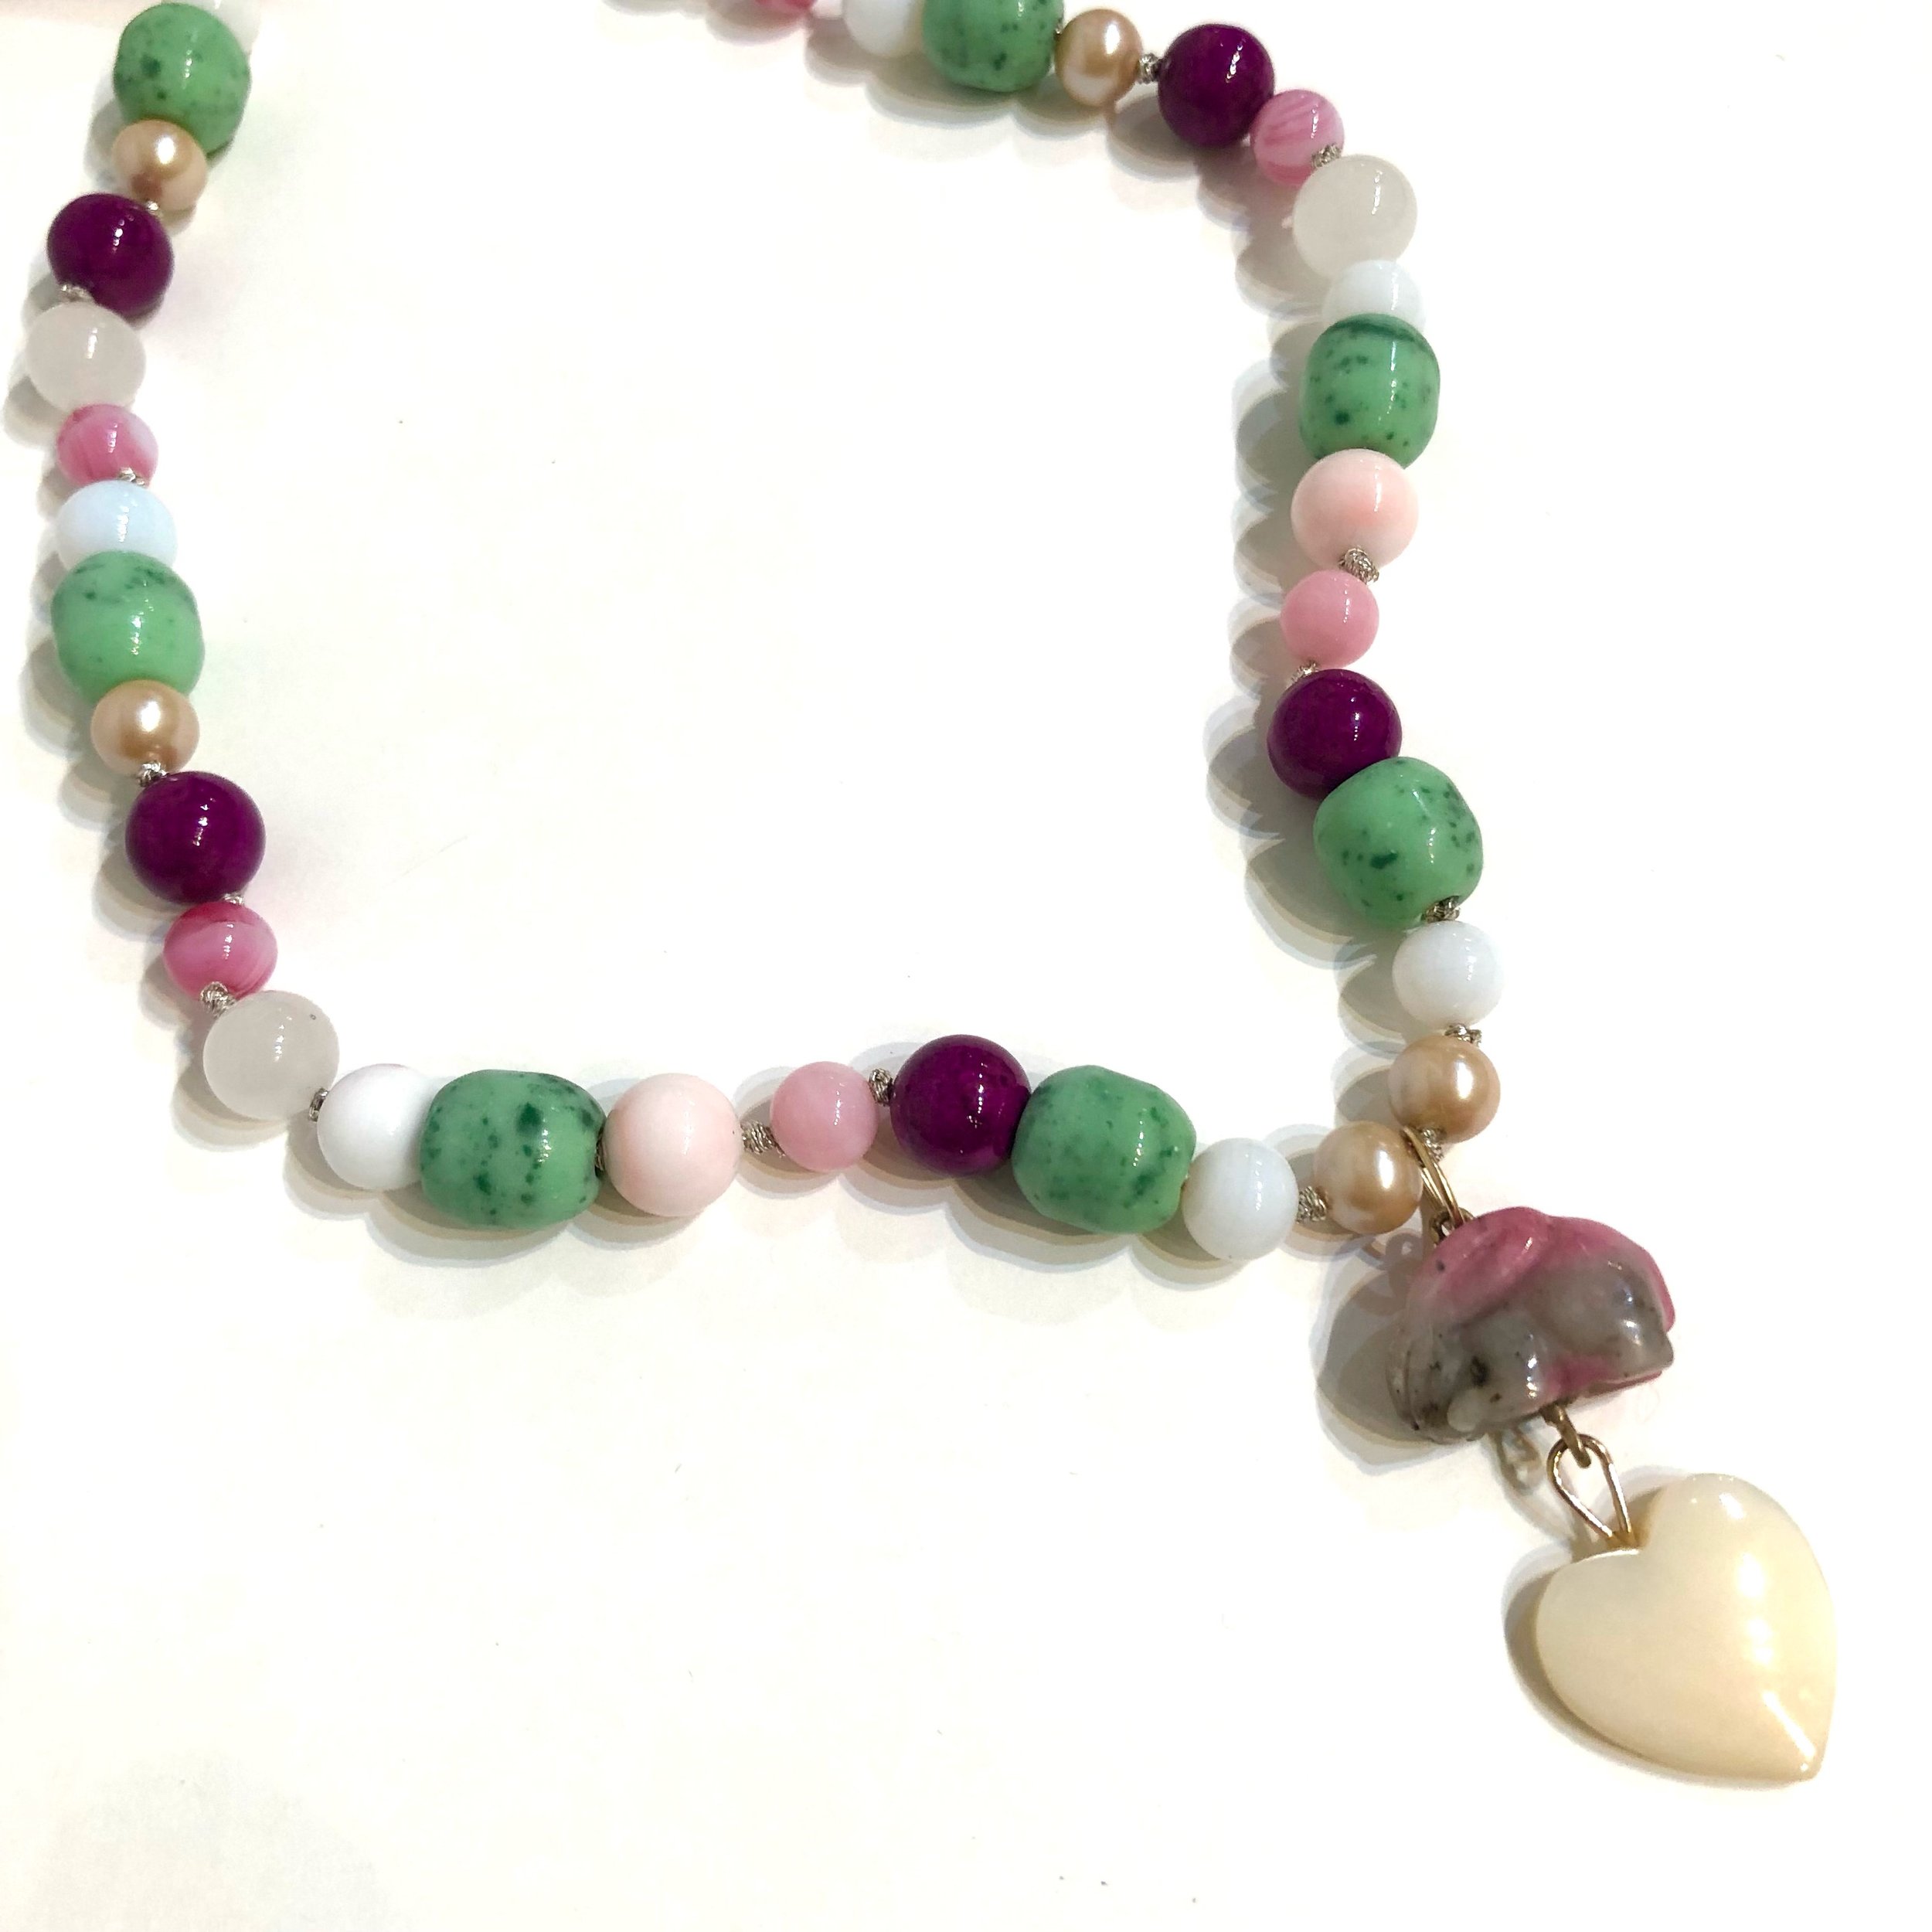  Bun bun necklace gum drop beads with rhodonite bunny 